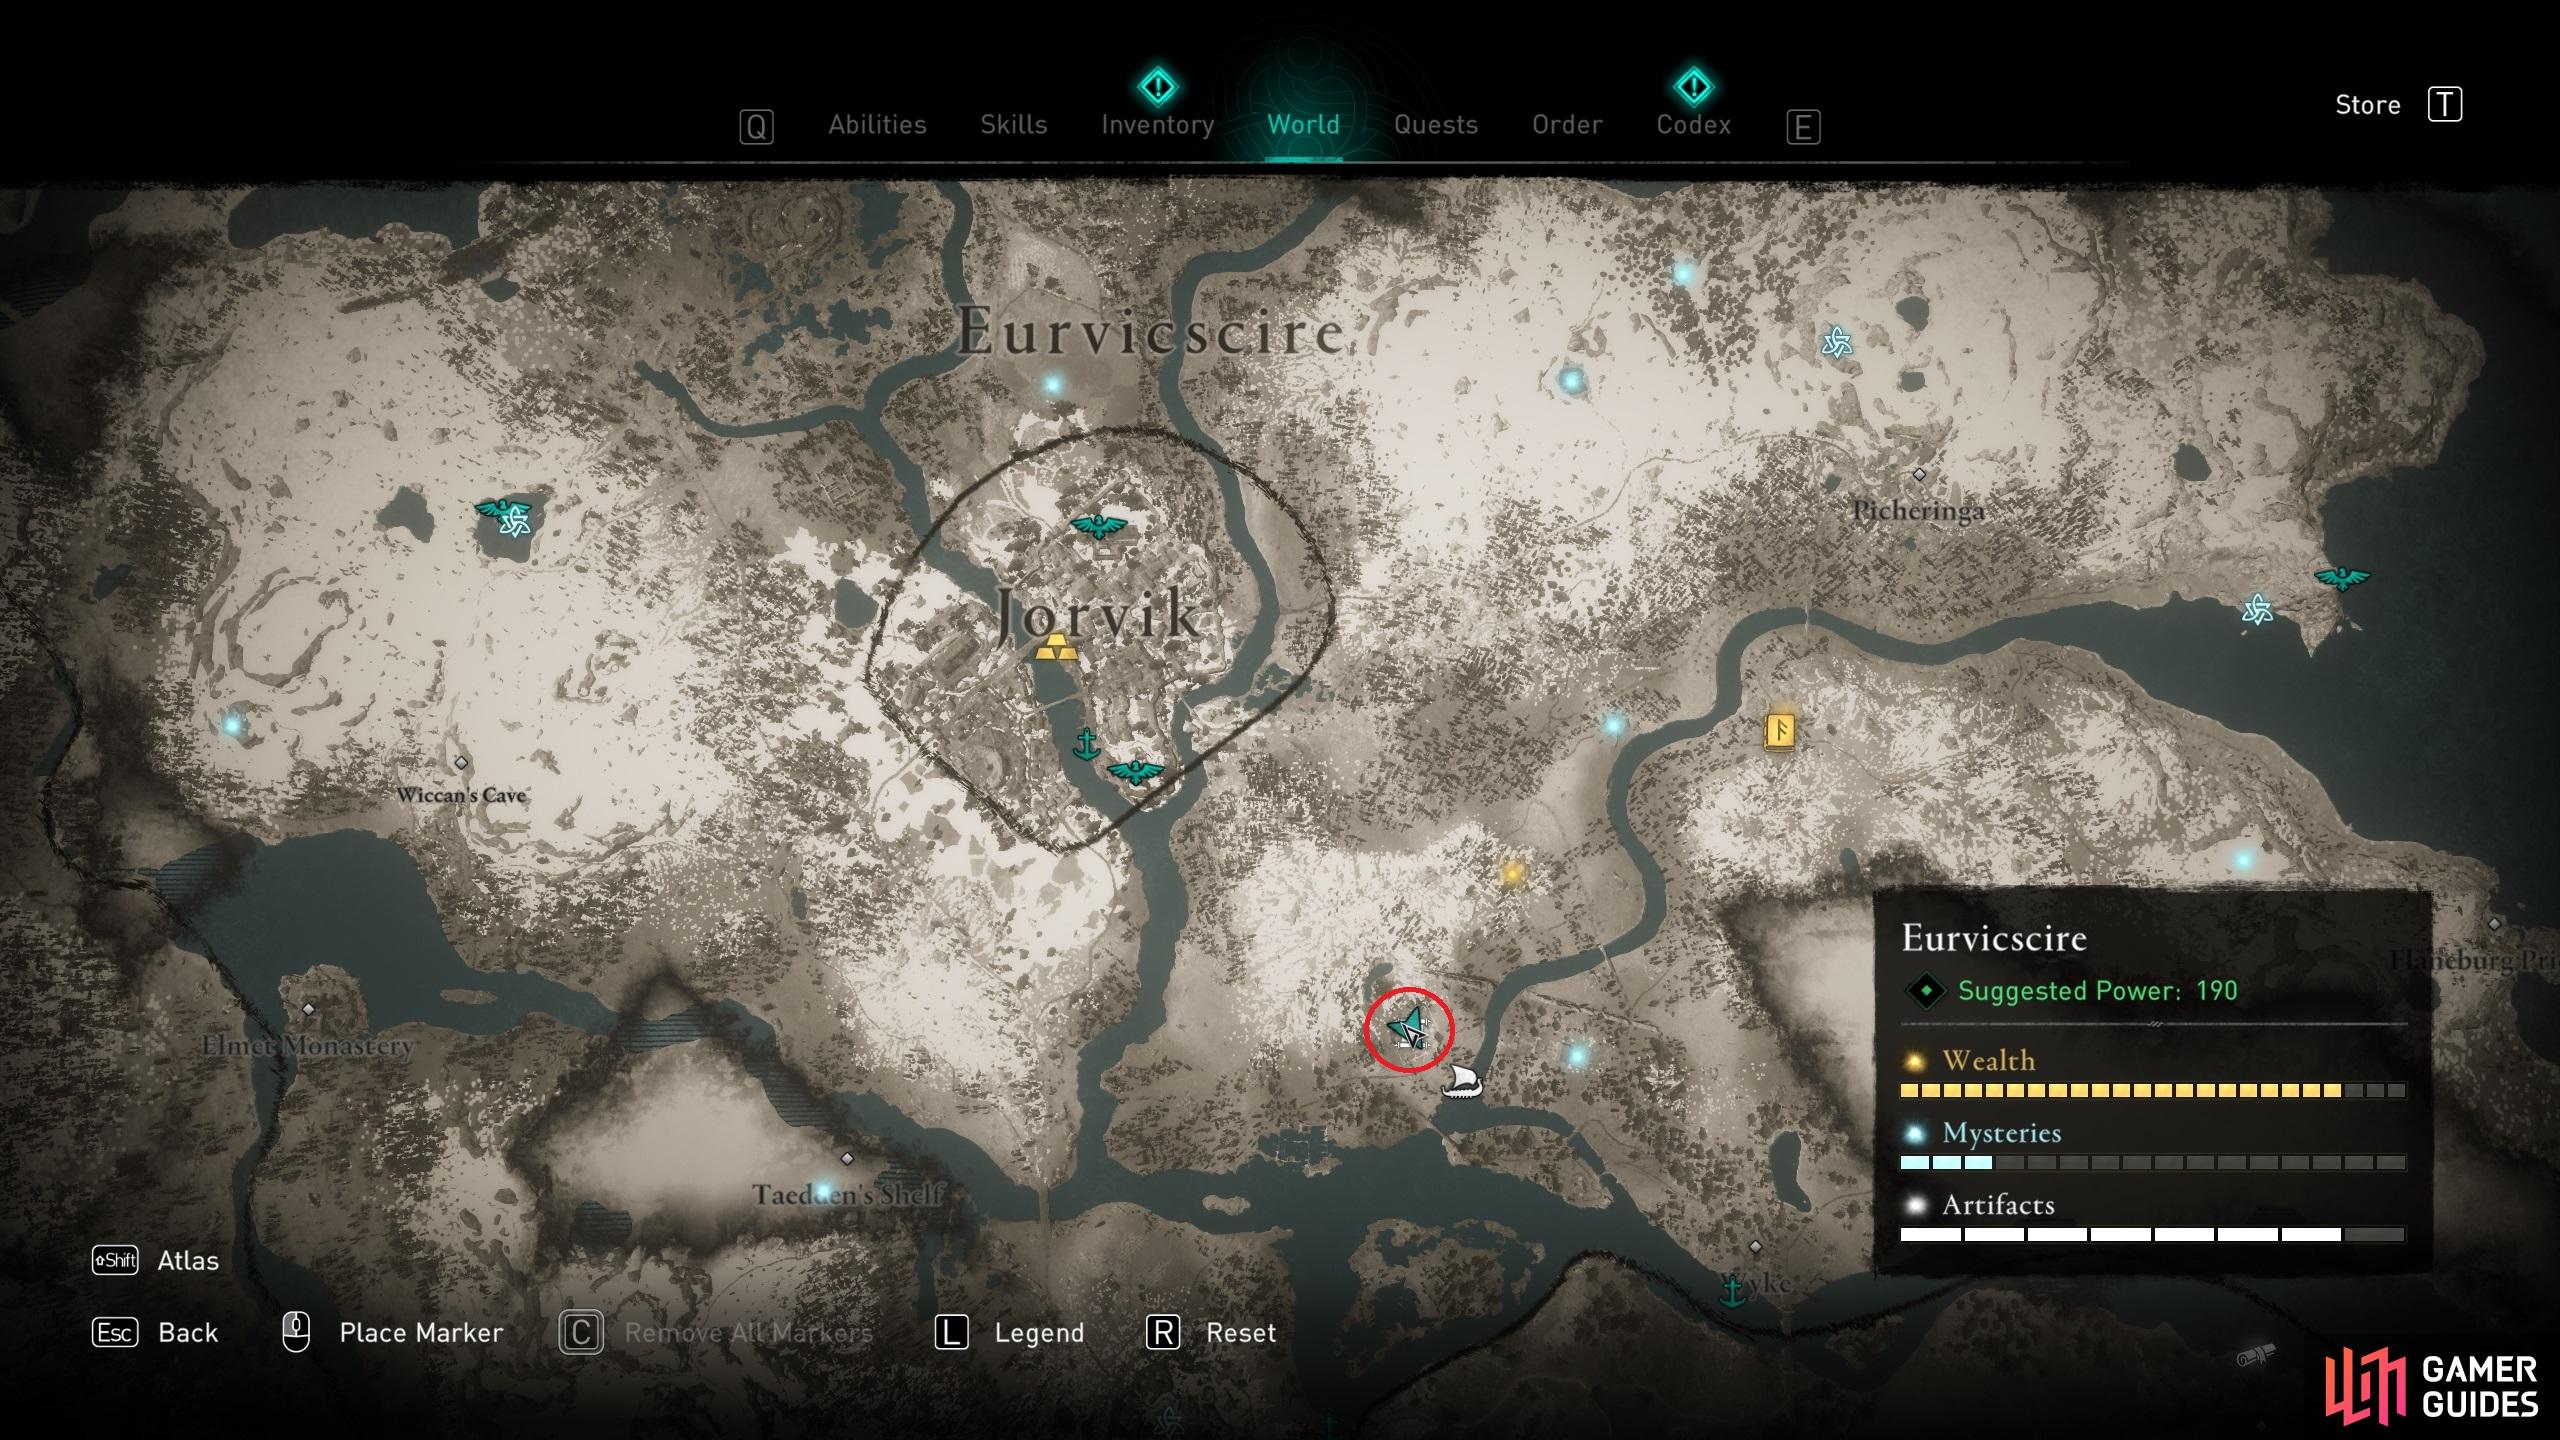 Assassin's Creed: Valhalla - Treasure Hoard map locations list by region